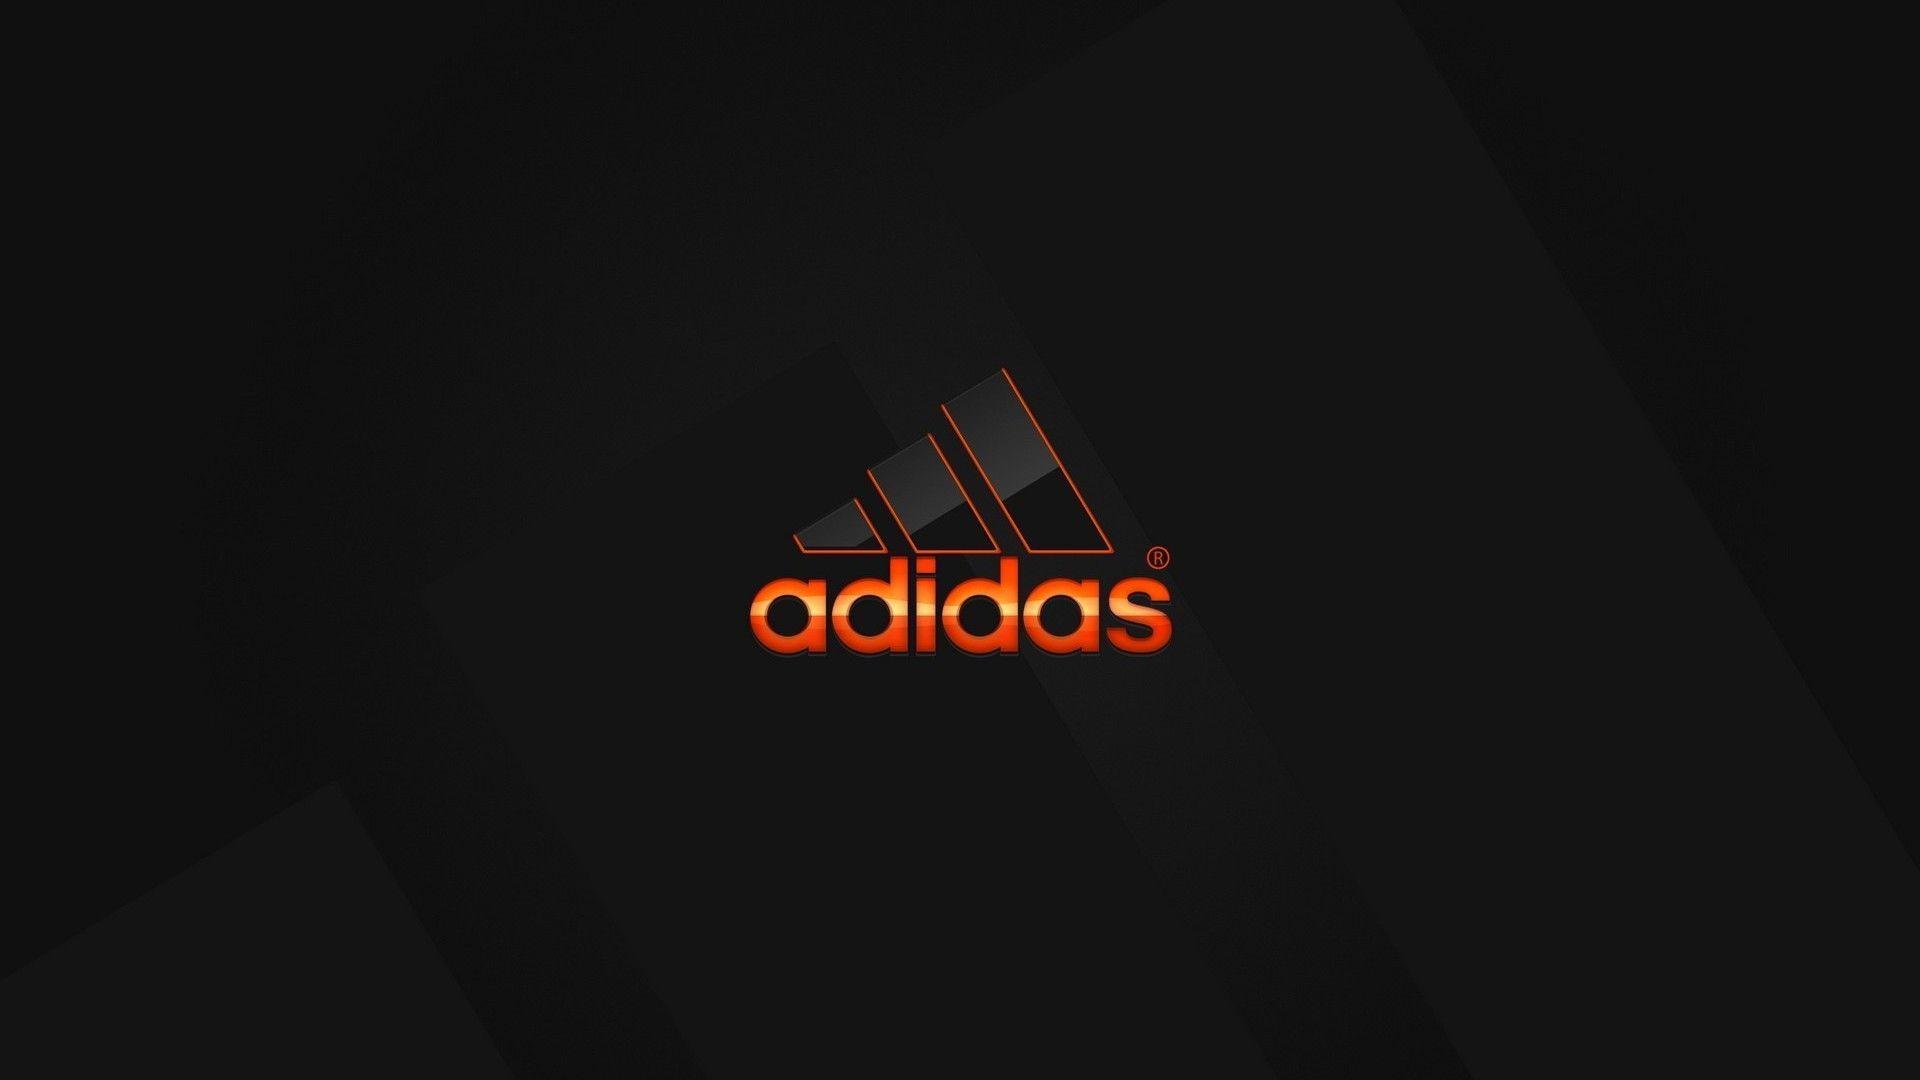 Adidas Logo Wallpaper. Wallpaper, Background, Image, Art Photo